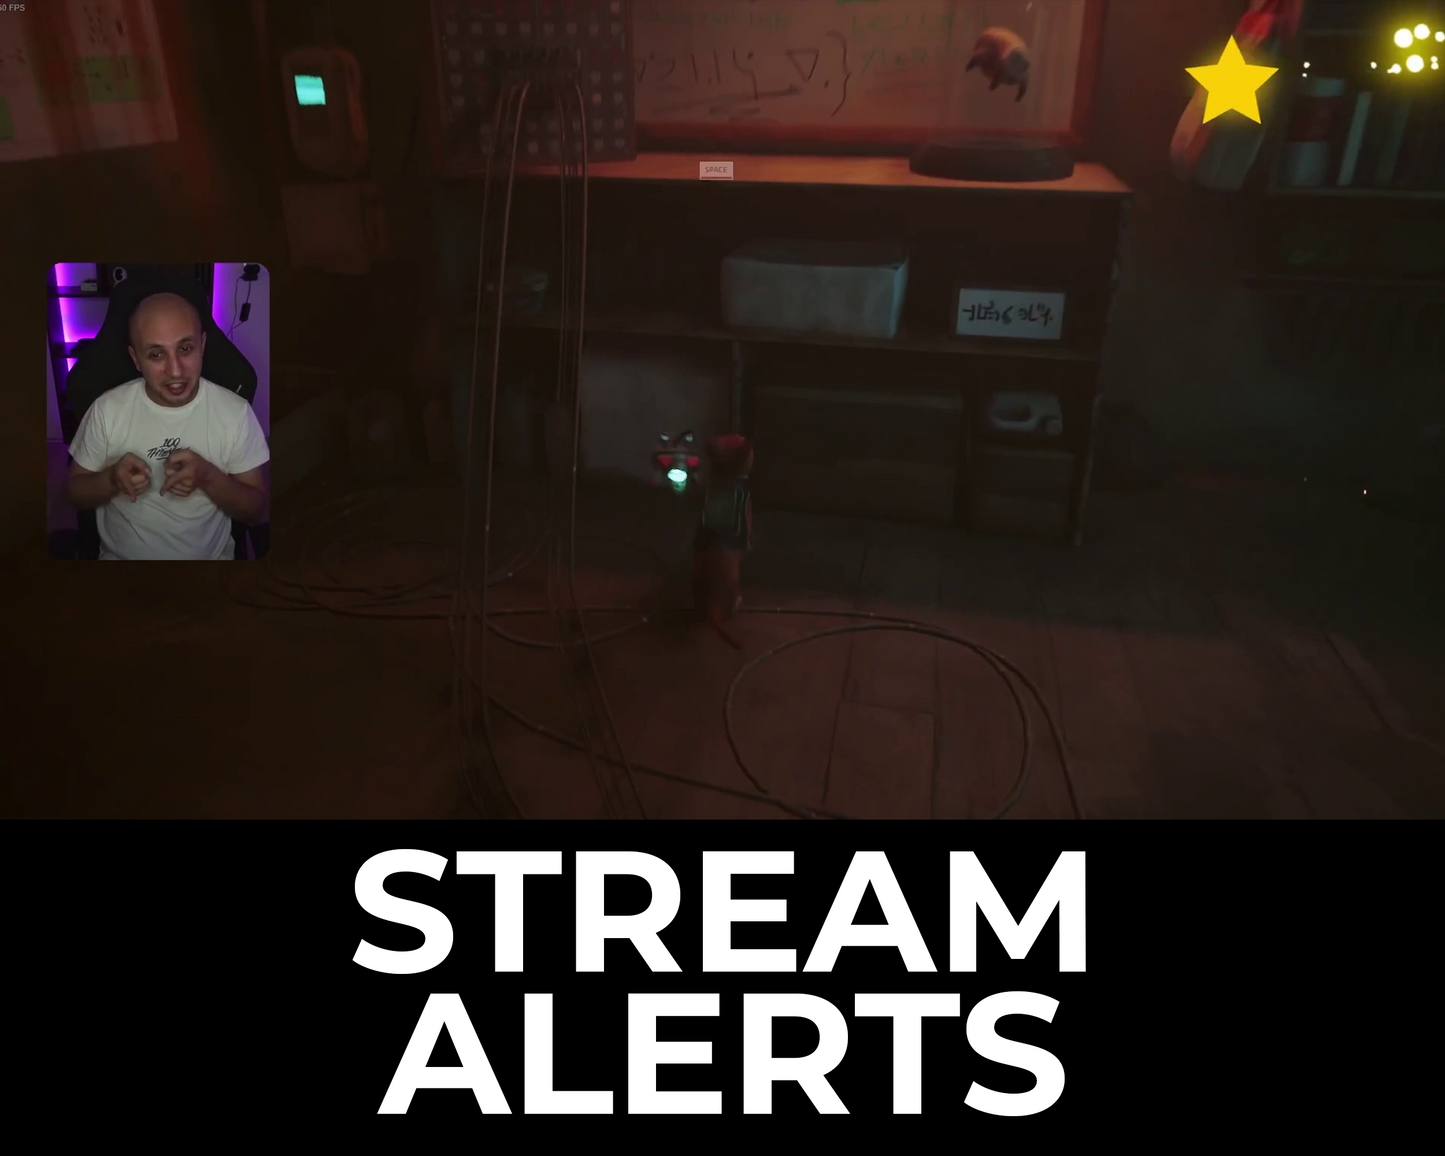 Shooting Star Twitch Stream Alerts